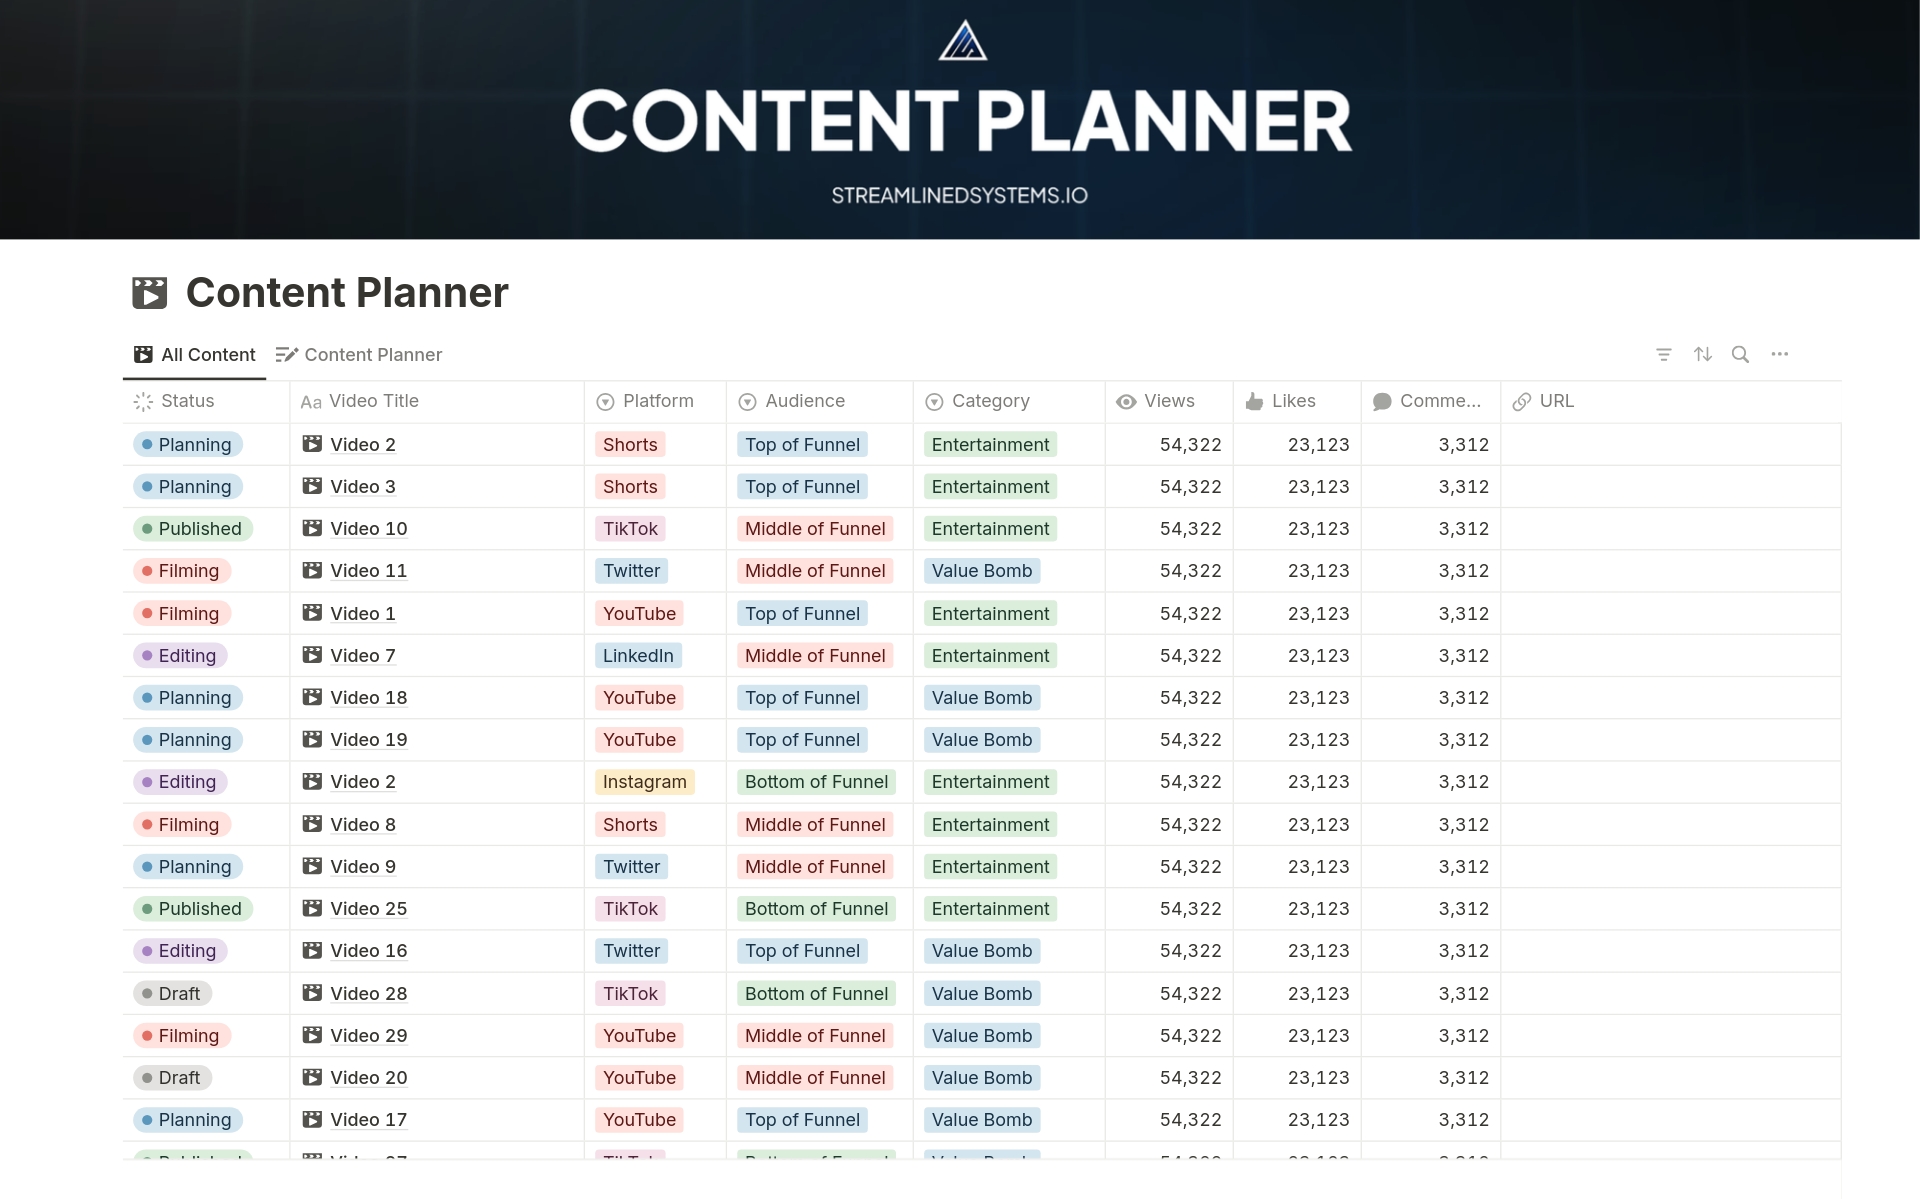 Vista previa de una plantilla para Content Planner